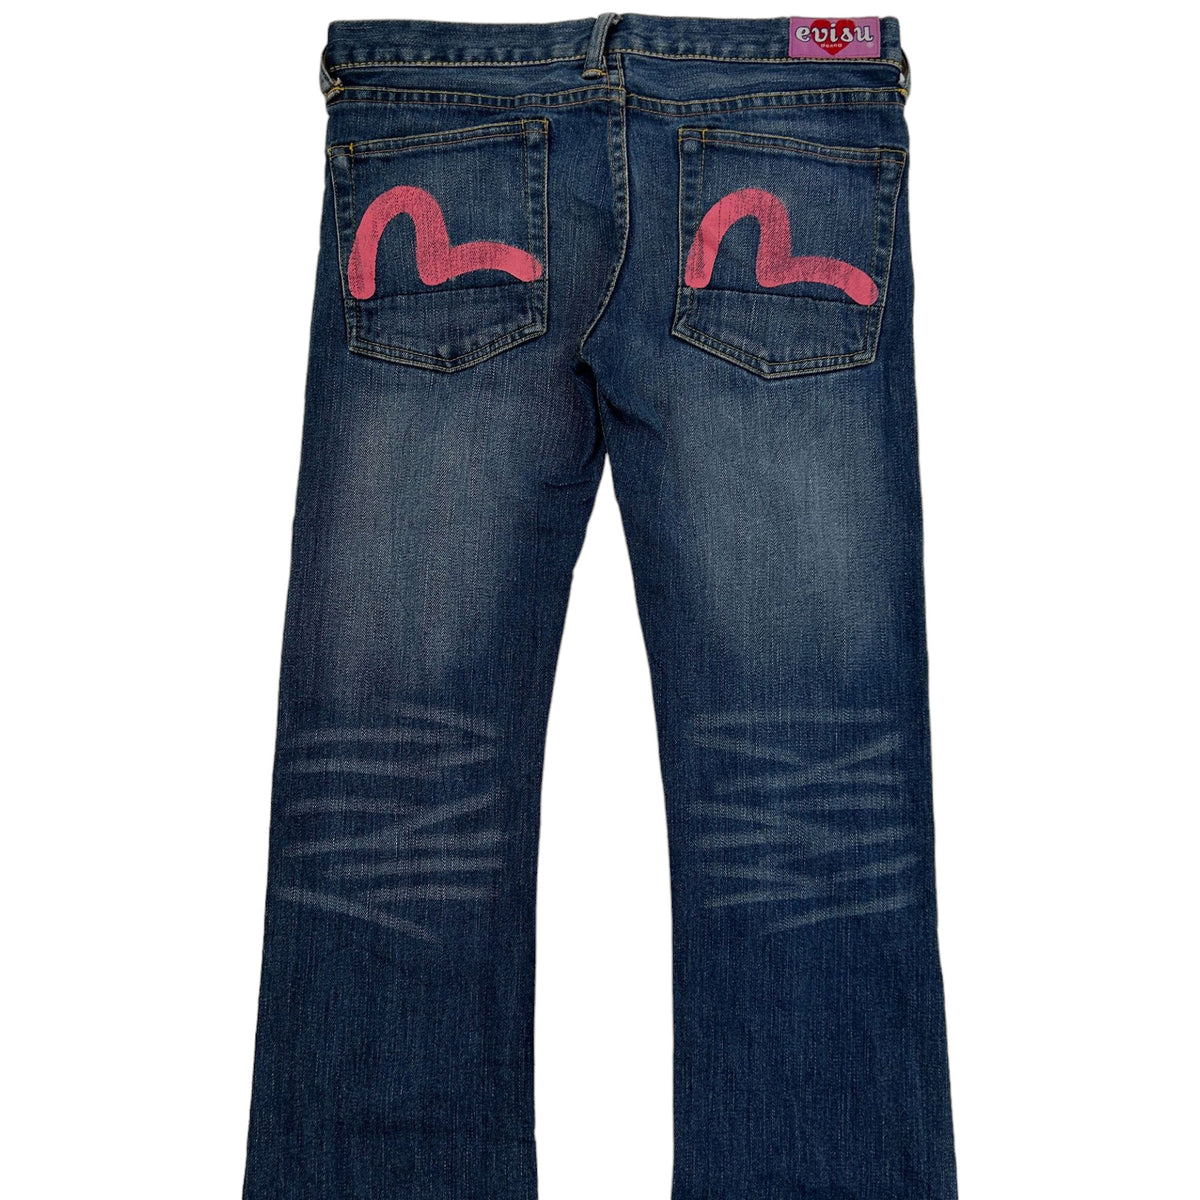 Vintage Evisu Double Gull Japanese Denim Jeans Size W28